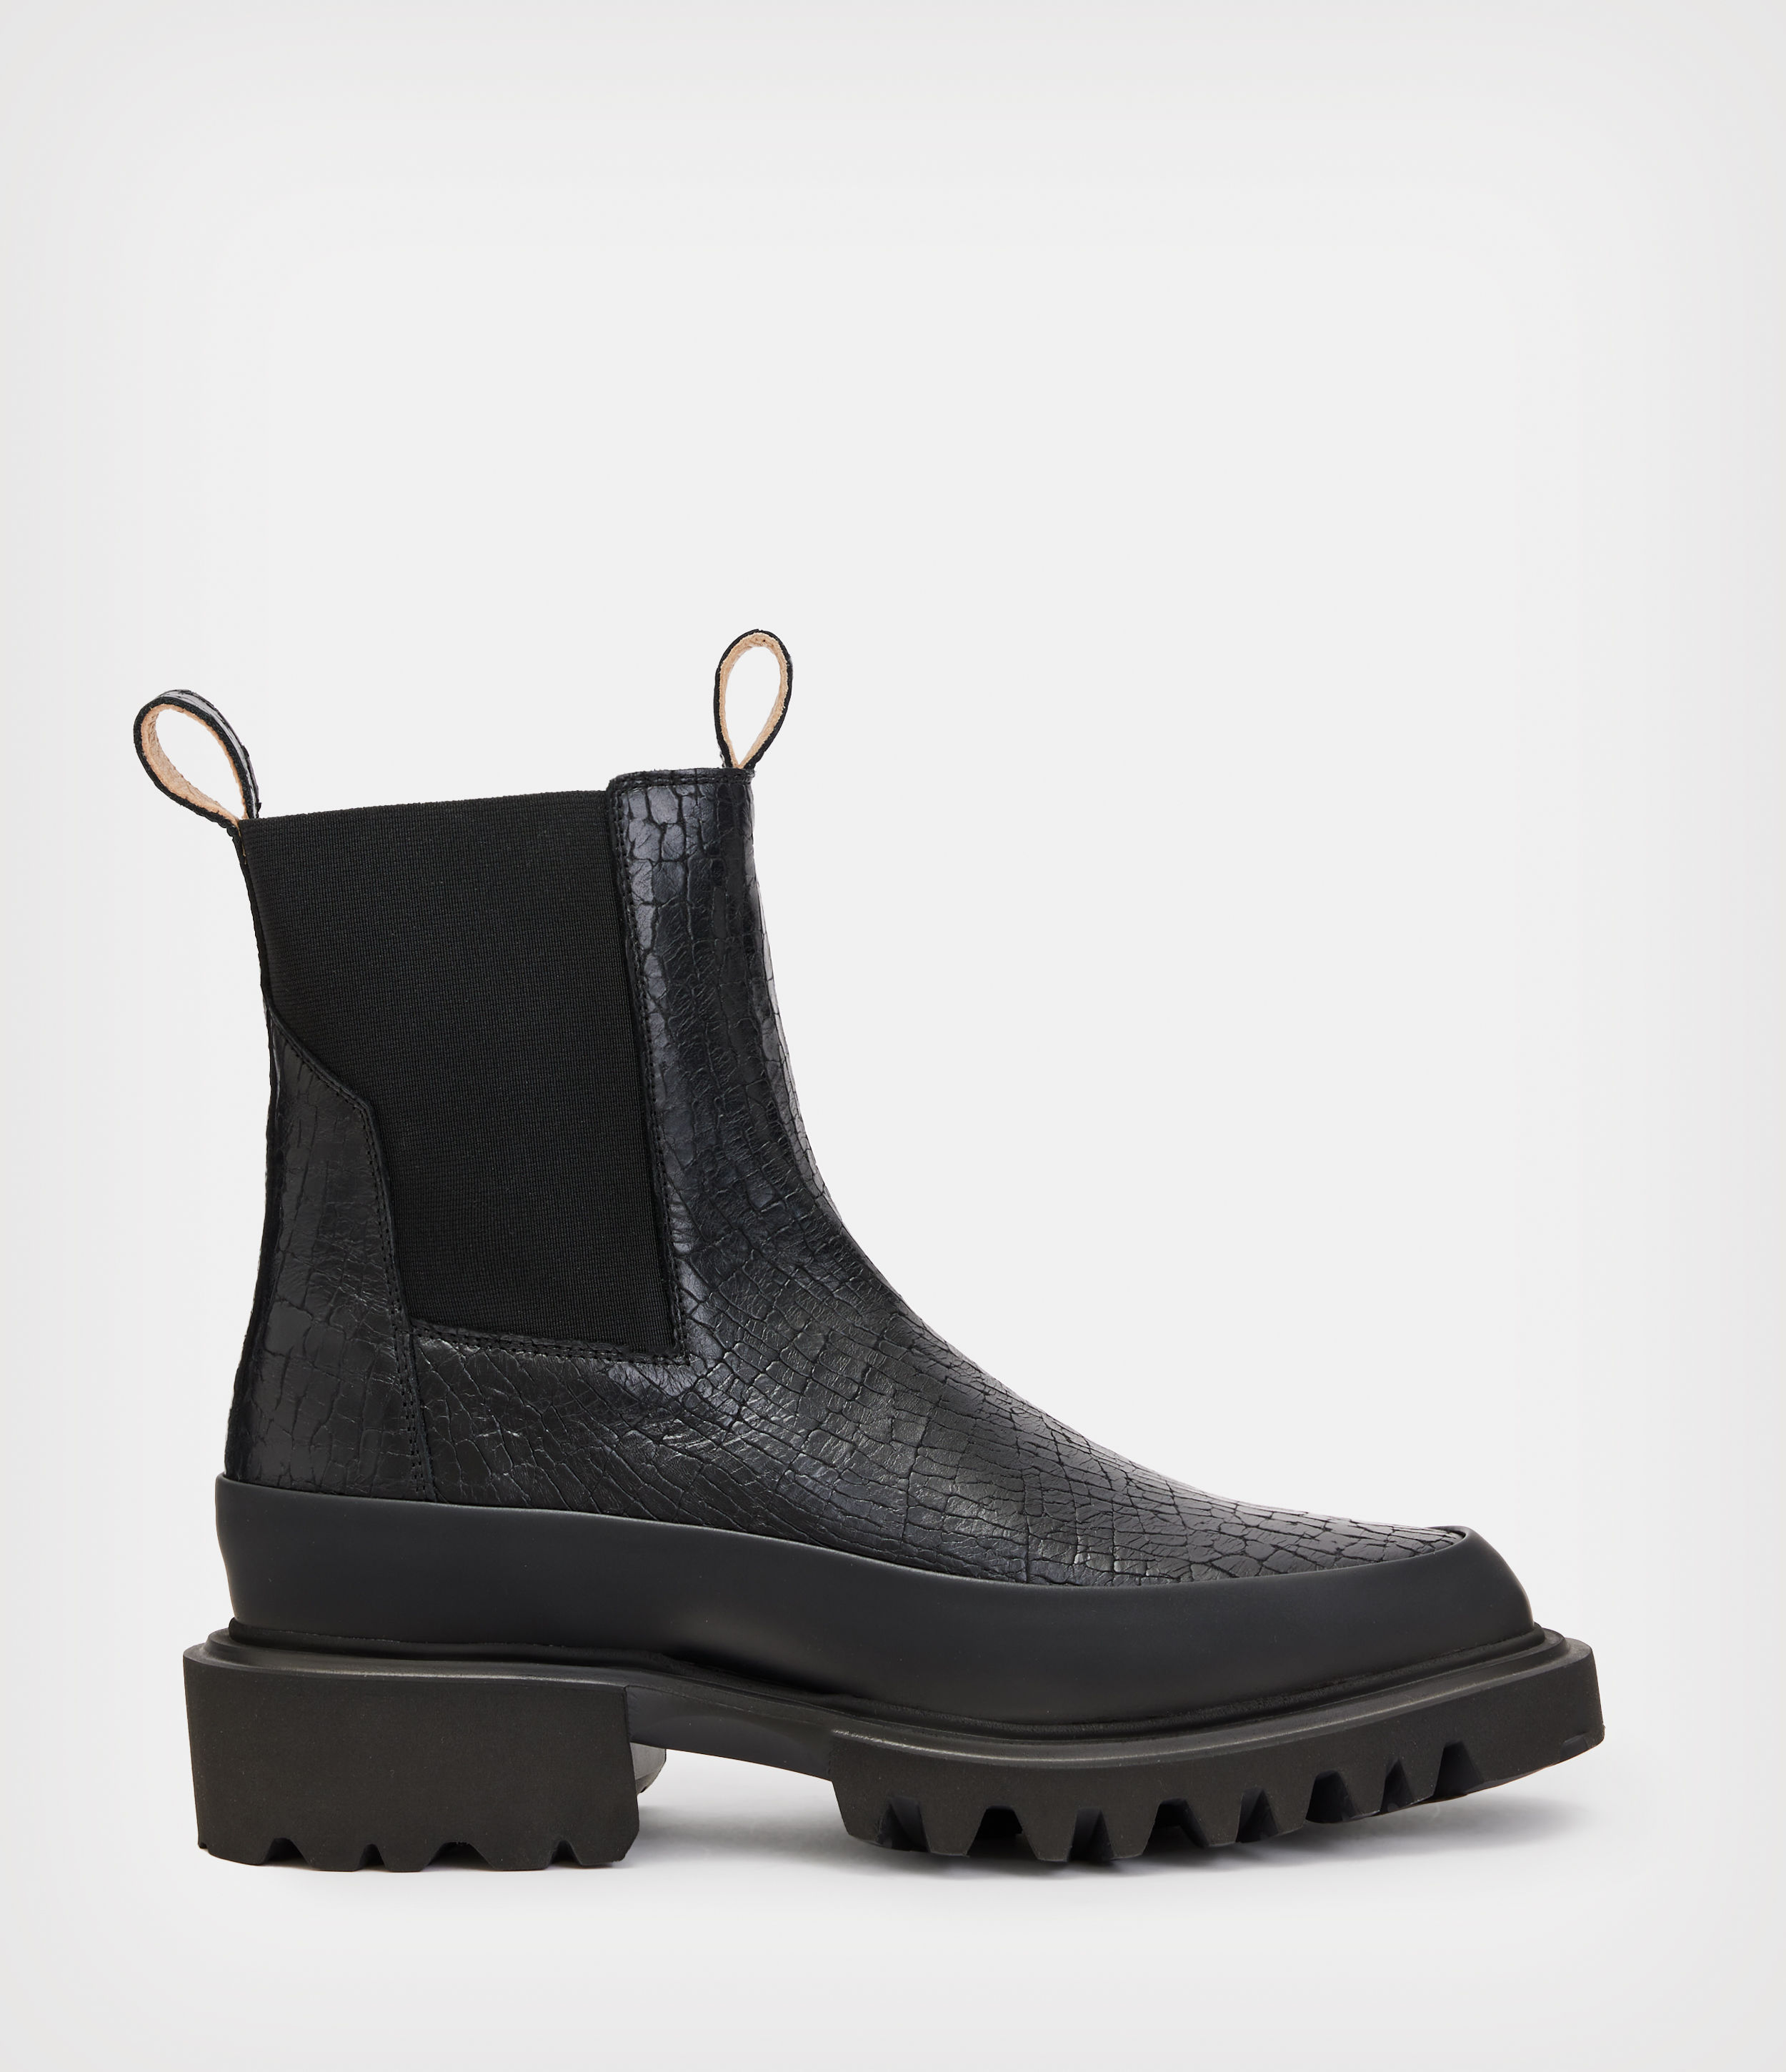 AllSaints Women's Harlee Leather Crocodile Boots, Black, Size: UK 3/US 6/EU 36